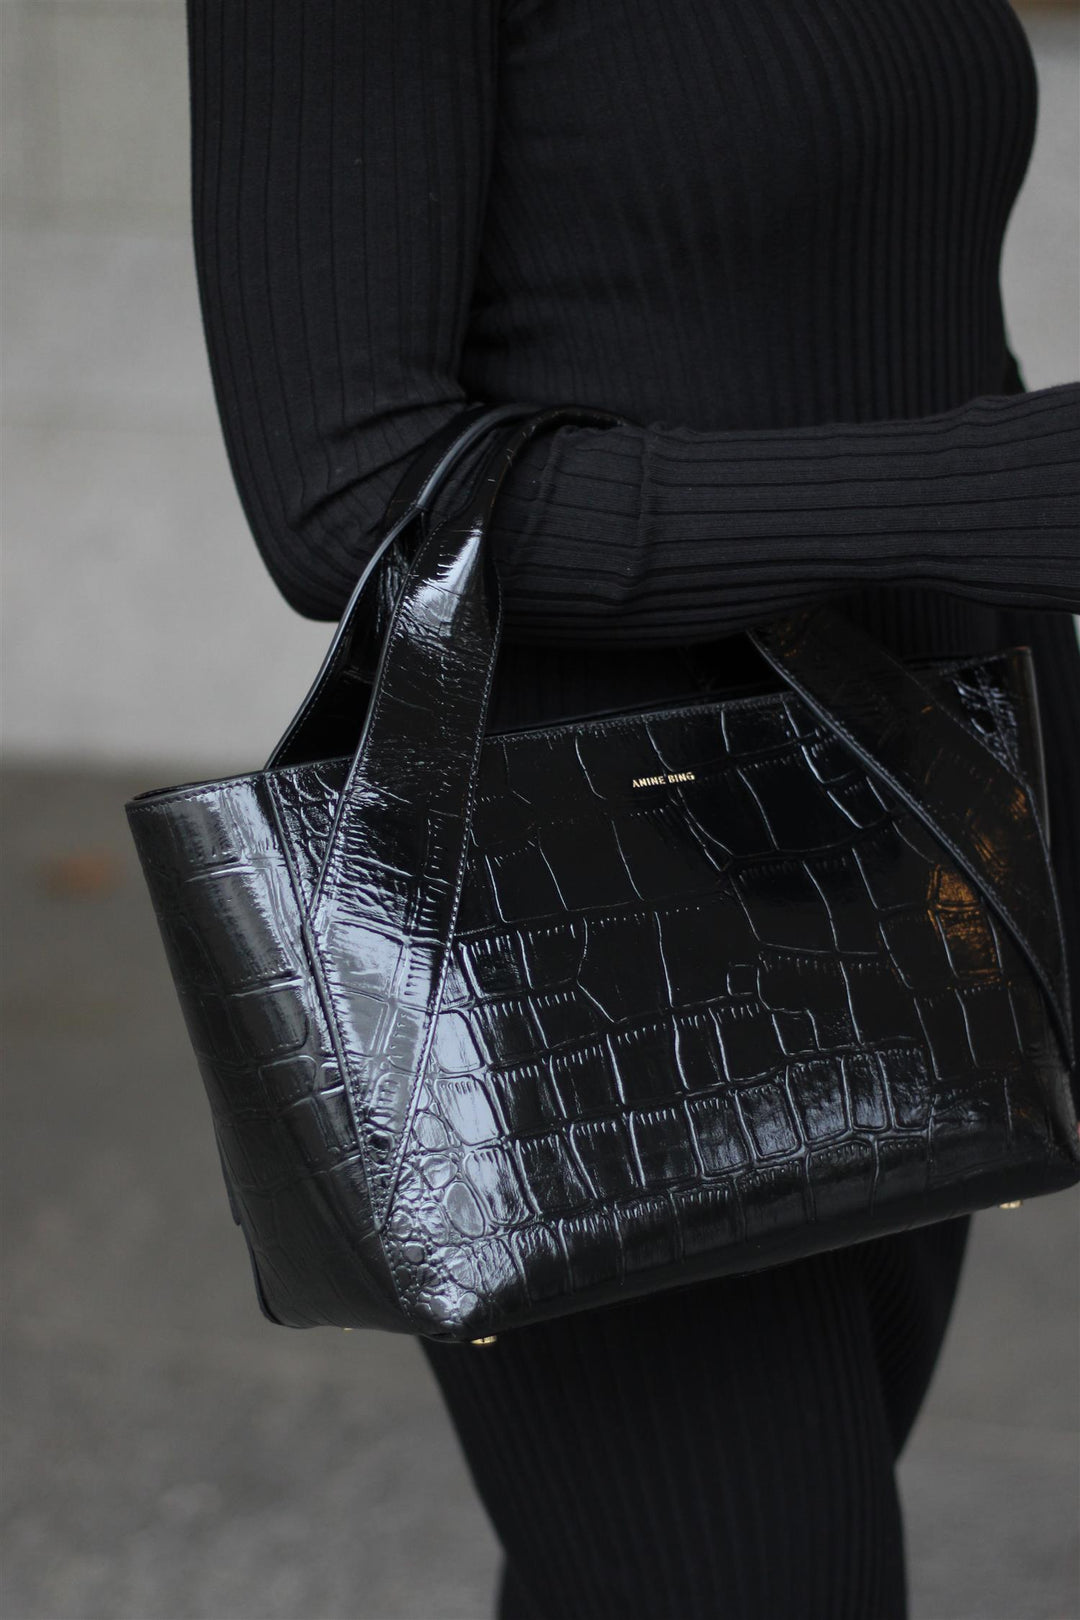 Anine Bing Maya Embossed Leather Tote Bag